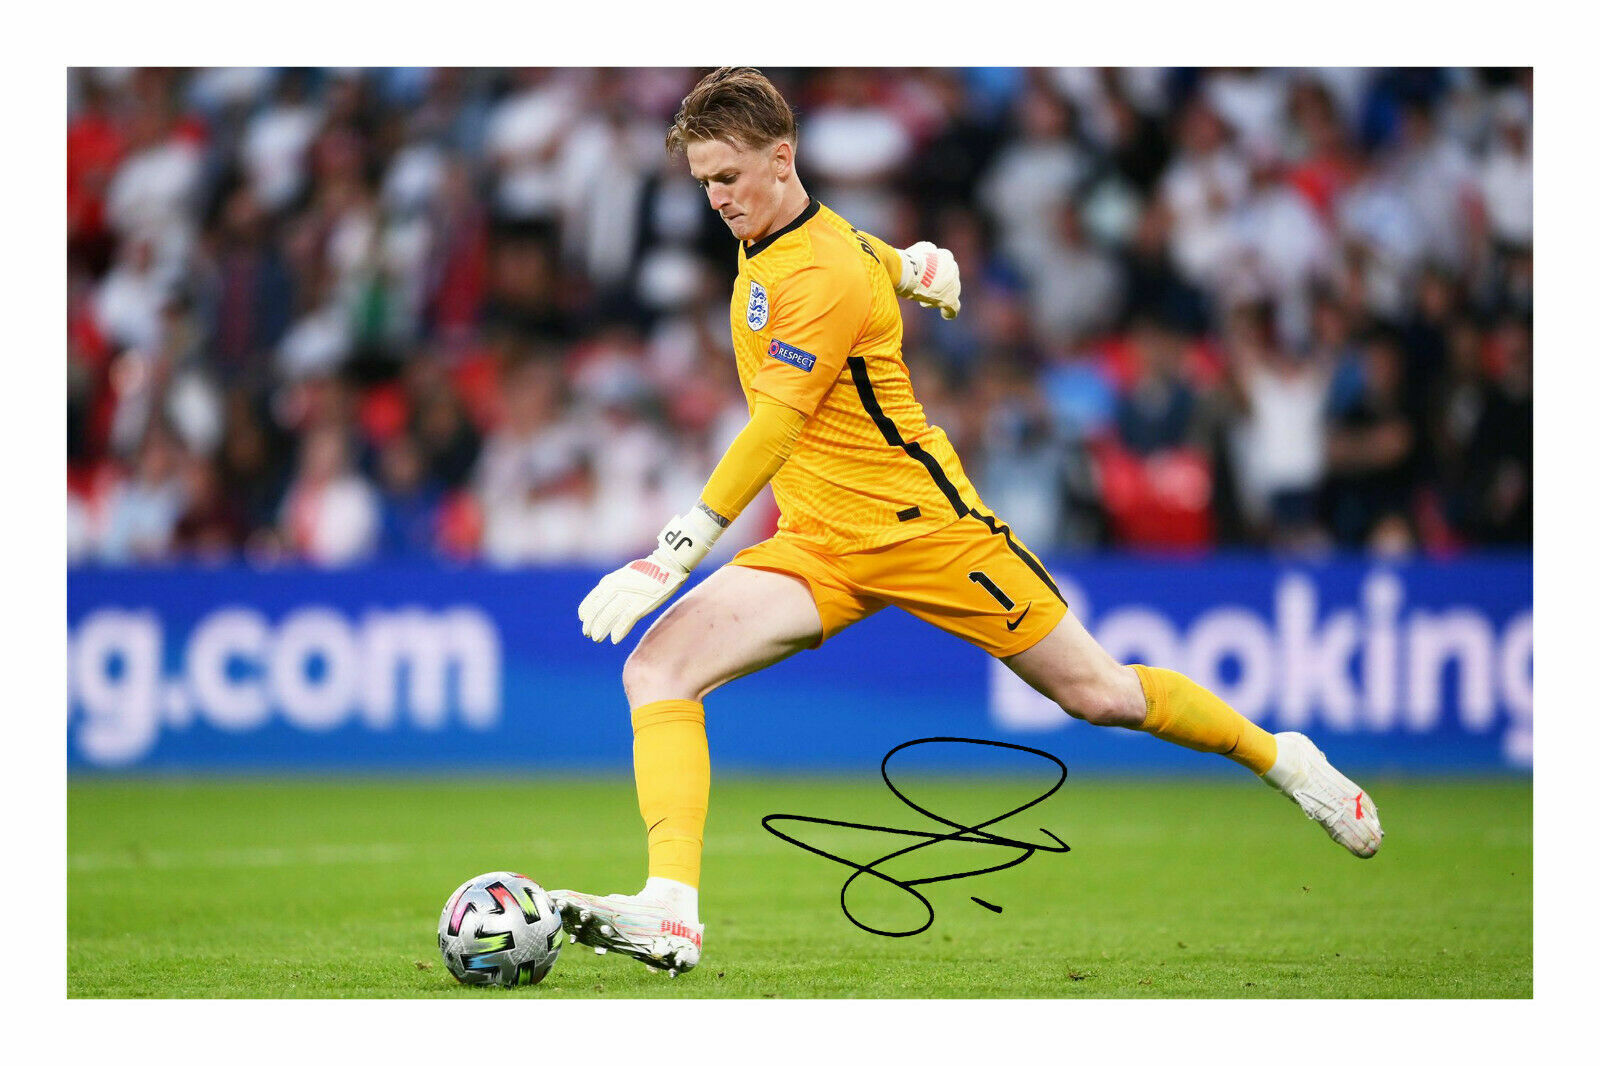 Jordan Pickford - England Euro 2020 2021 Autograph Signed Photo Poster painting Print